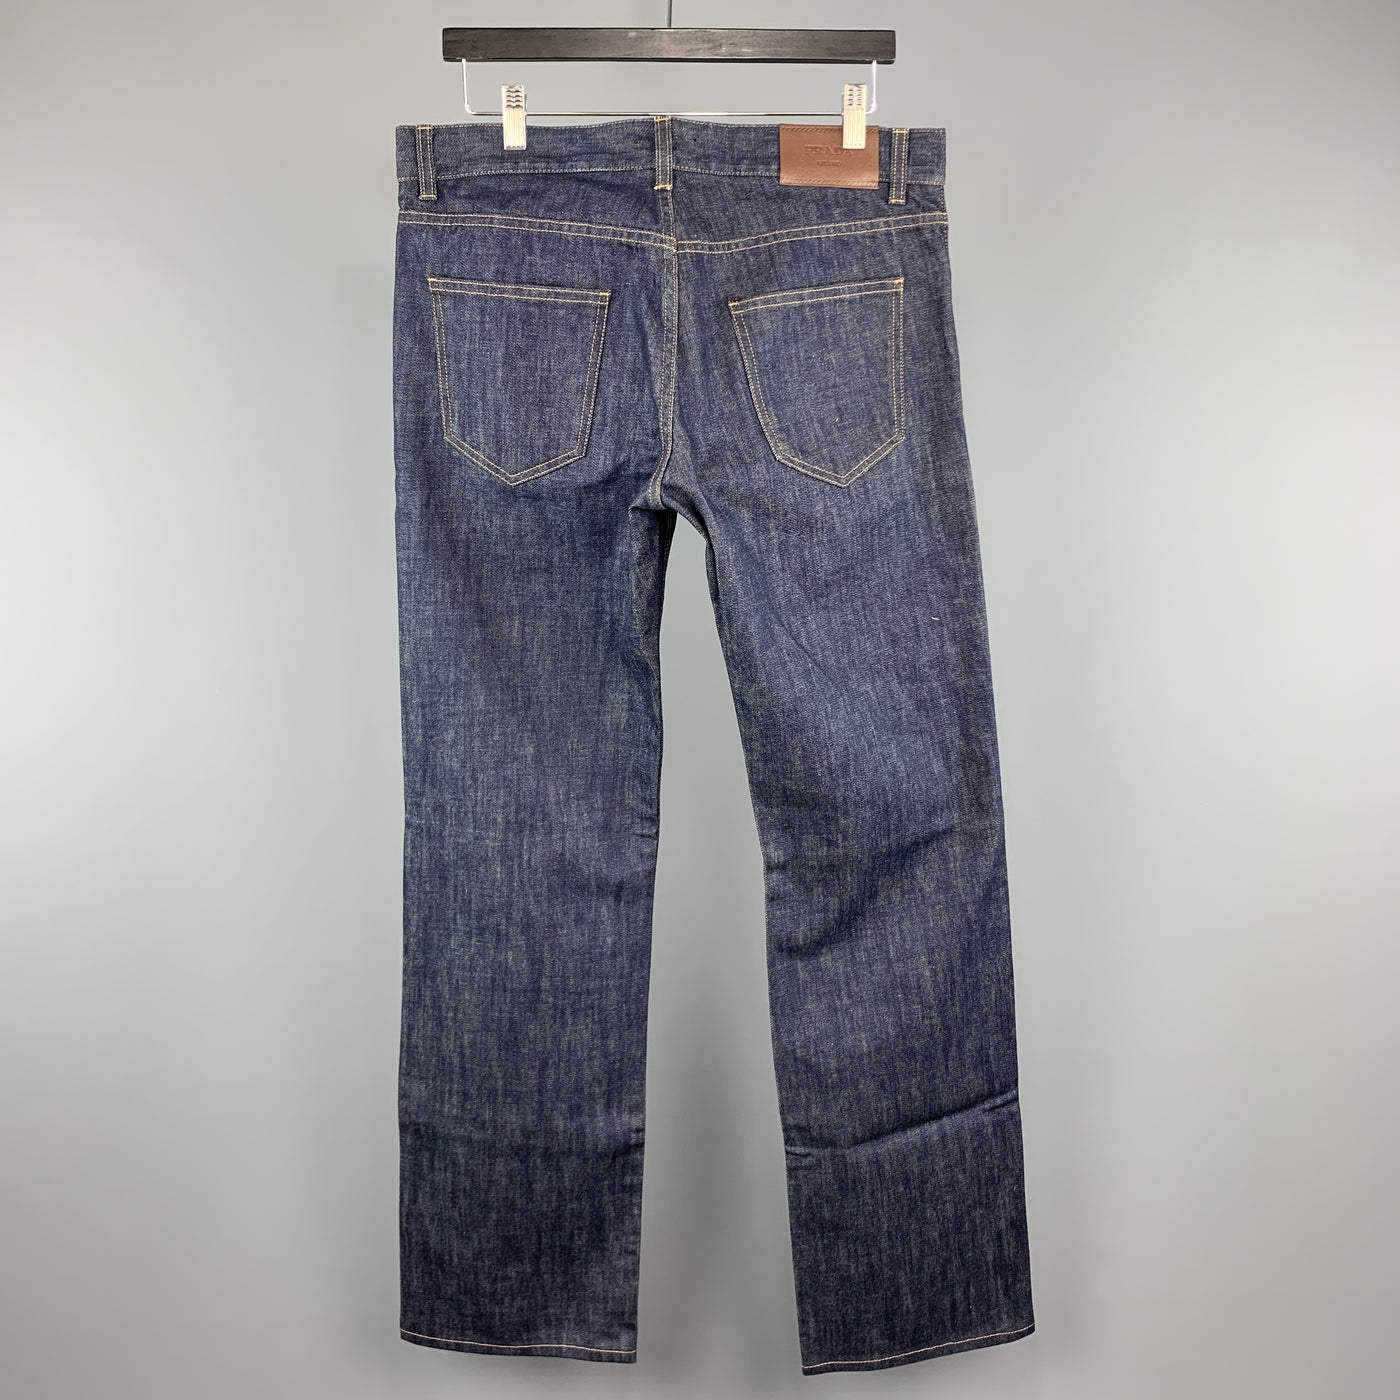 PRADA Size 33 x 34 Indigo Solid Cotton Button Fly Jeans